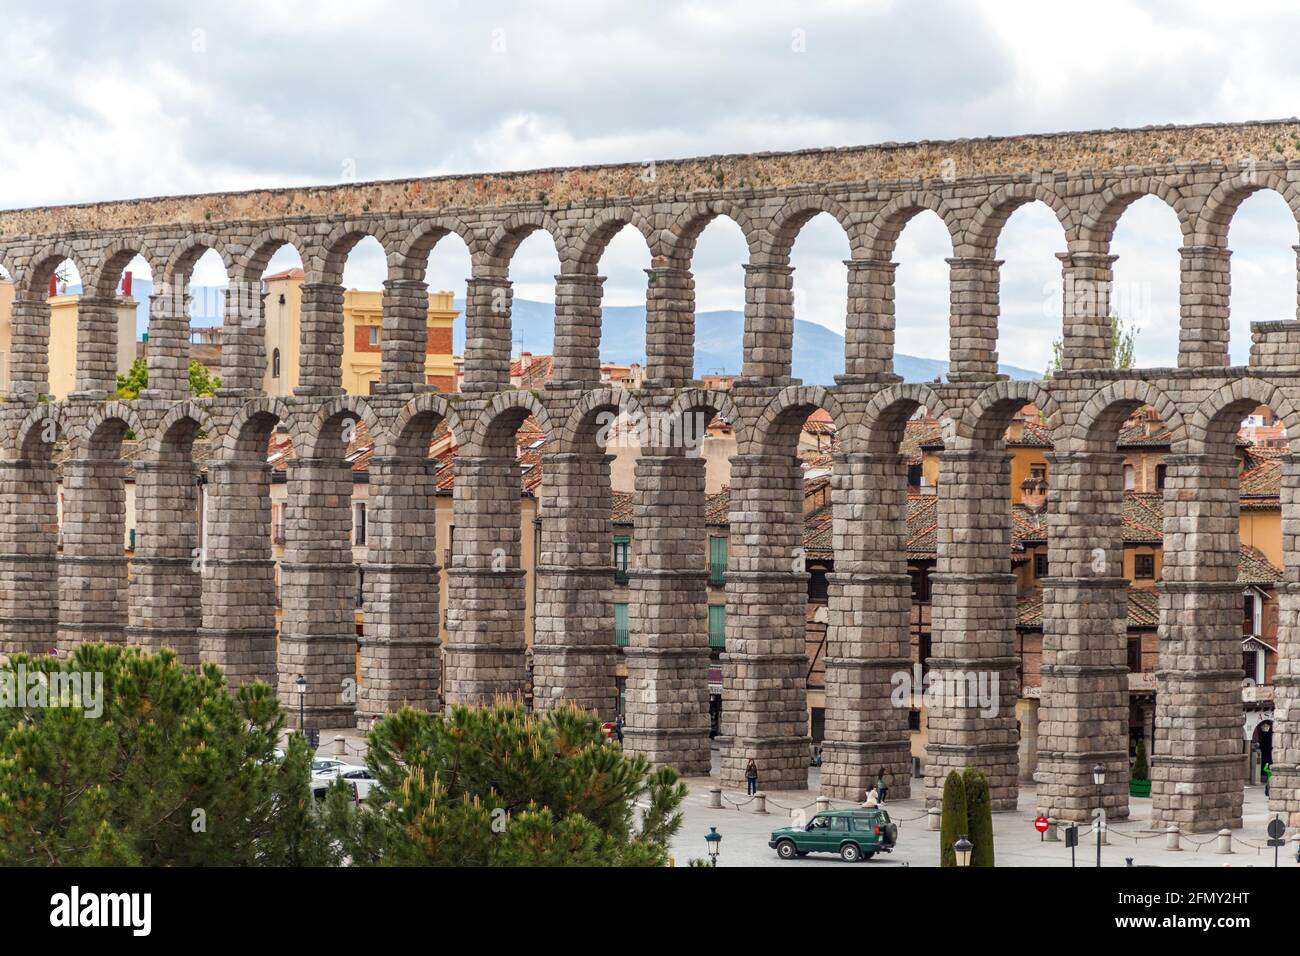 Aqueduct of Segovia, a Roman aqueduct in Segovia, Spain. UNESCO World Heritage Site Stock Photo